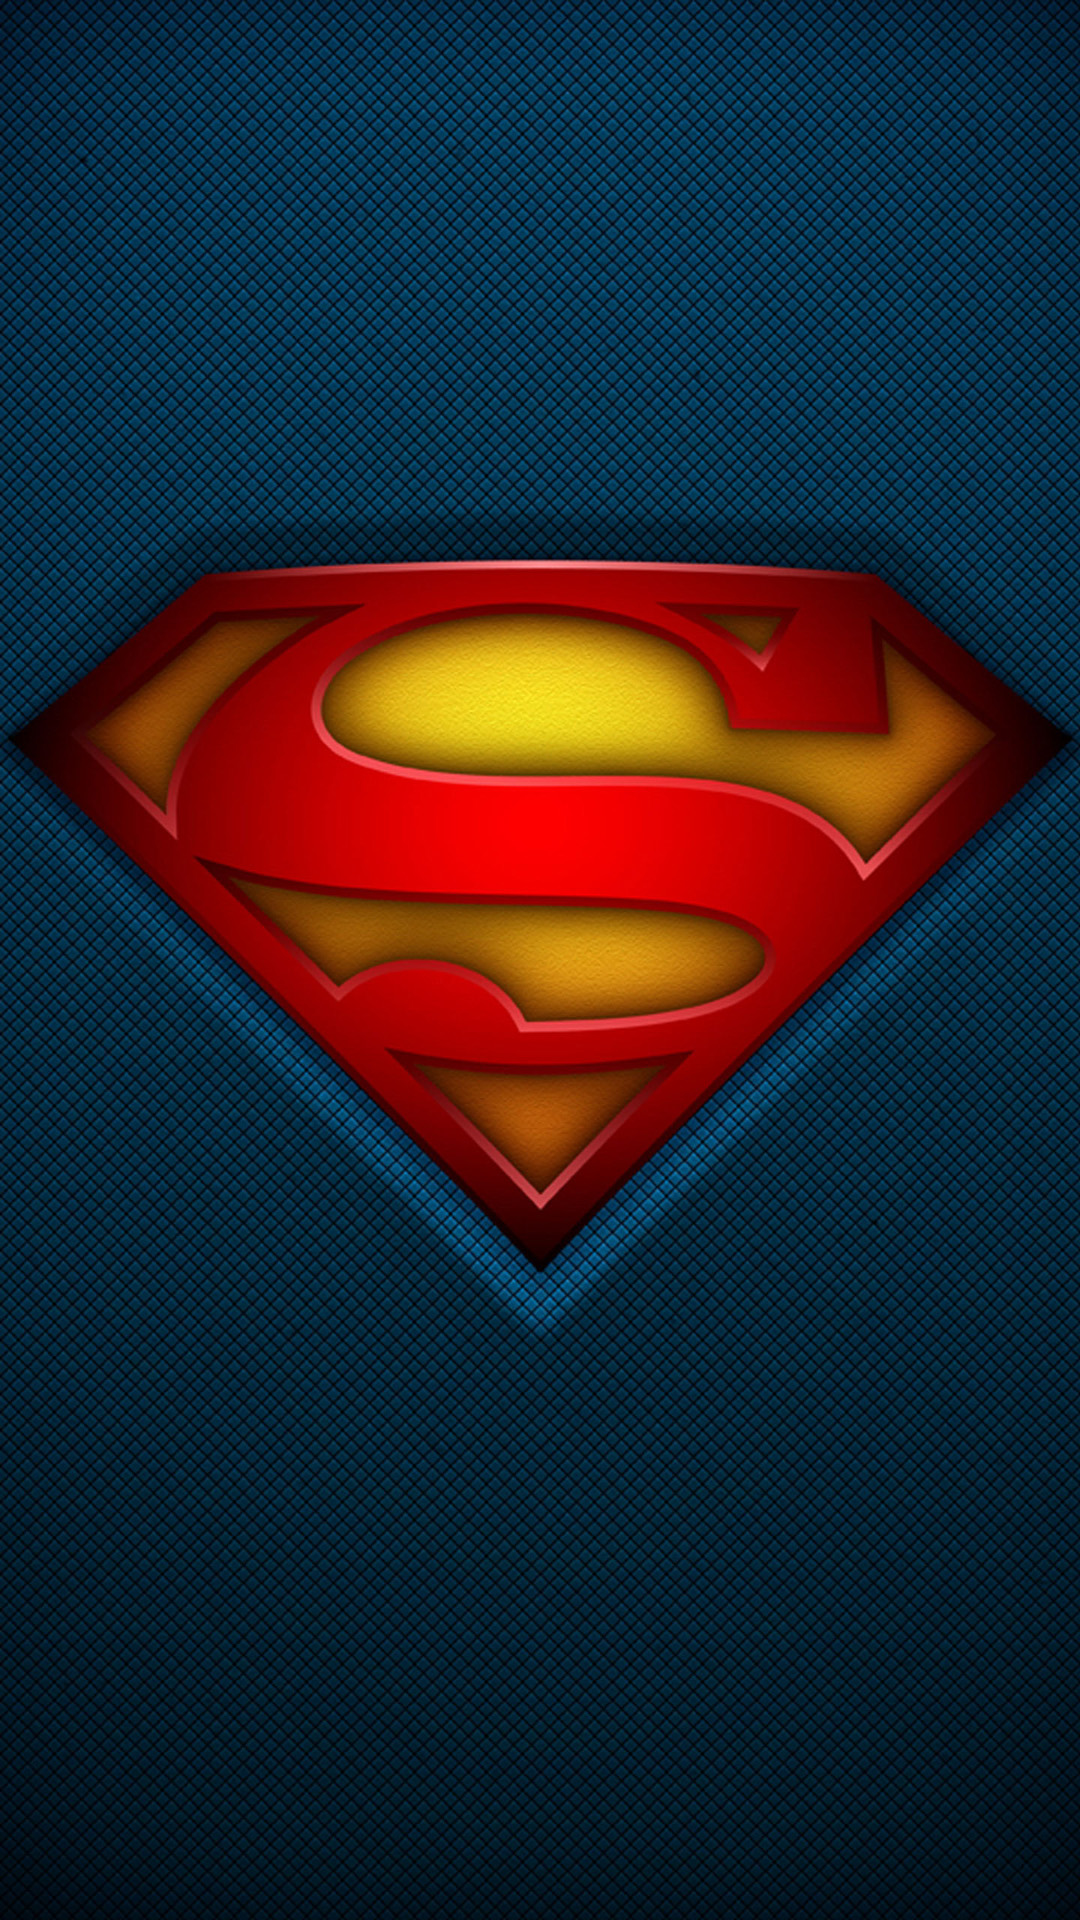 superman phone wallpaper,superman,superhero,red,fictional character,justice league